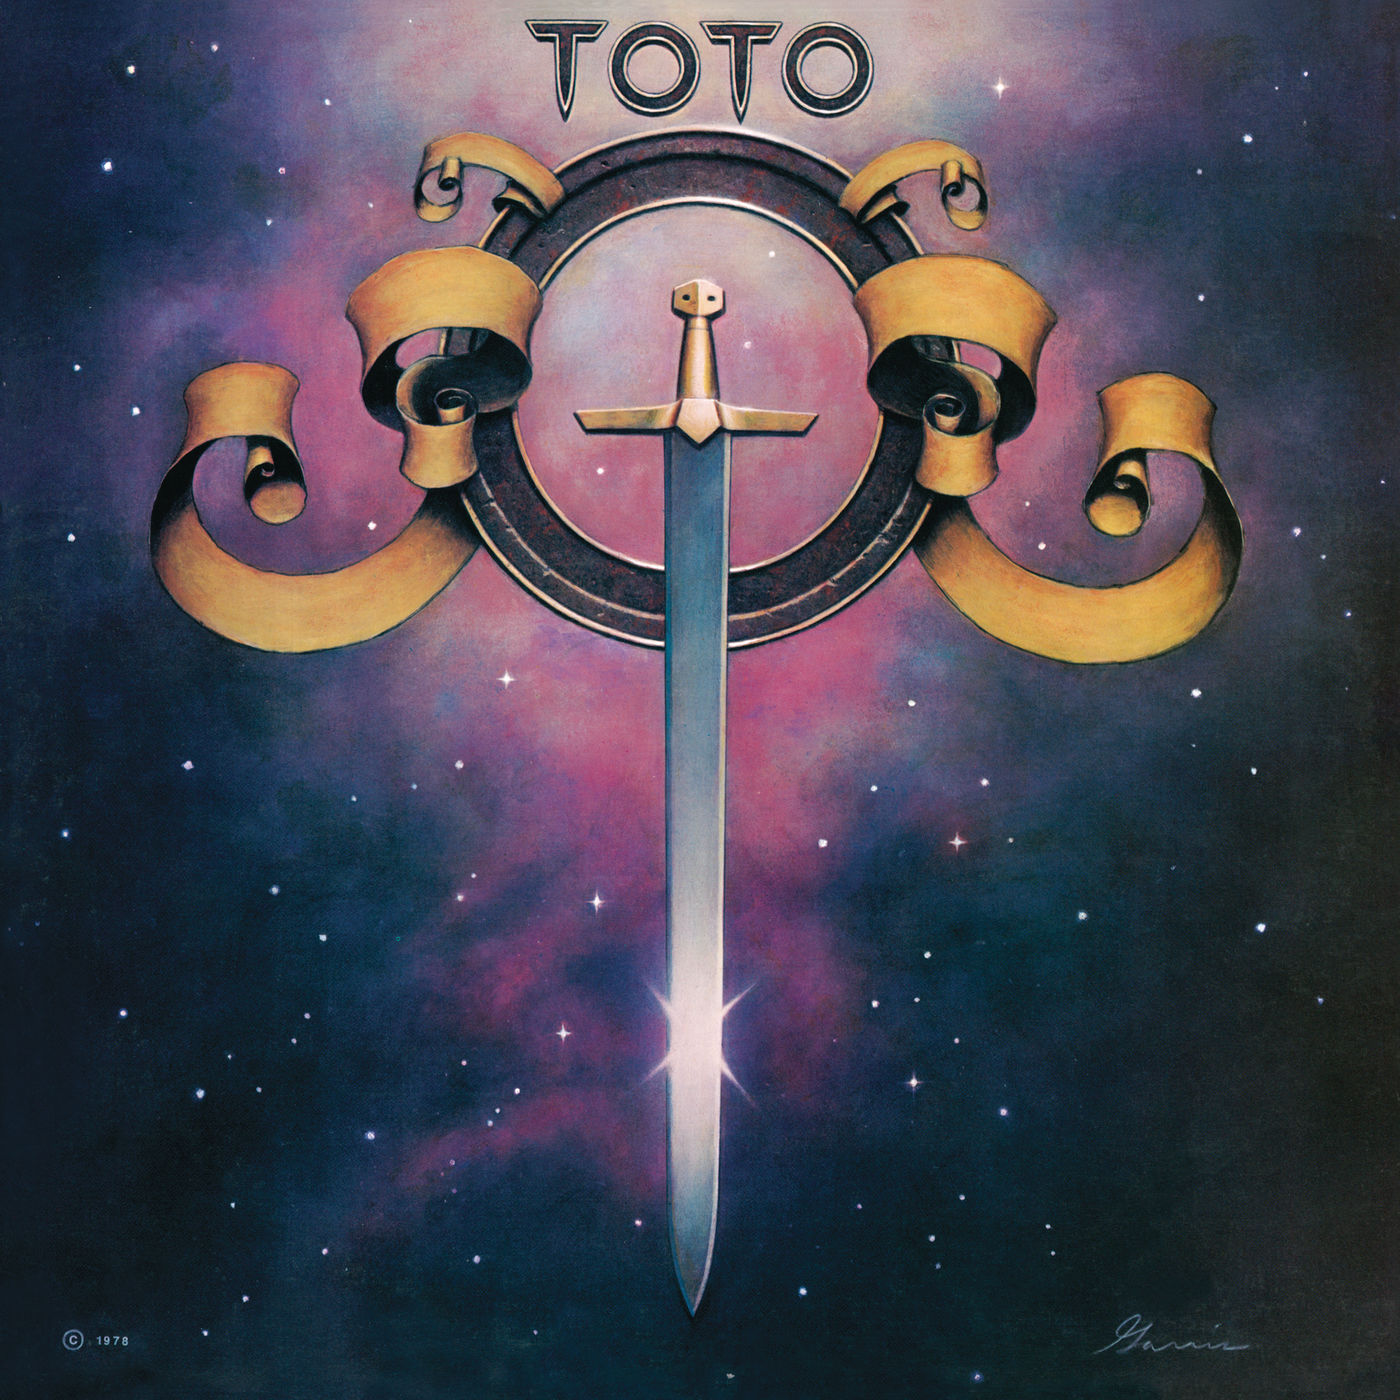 Toto – Toto